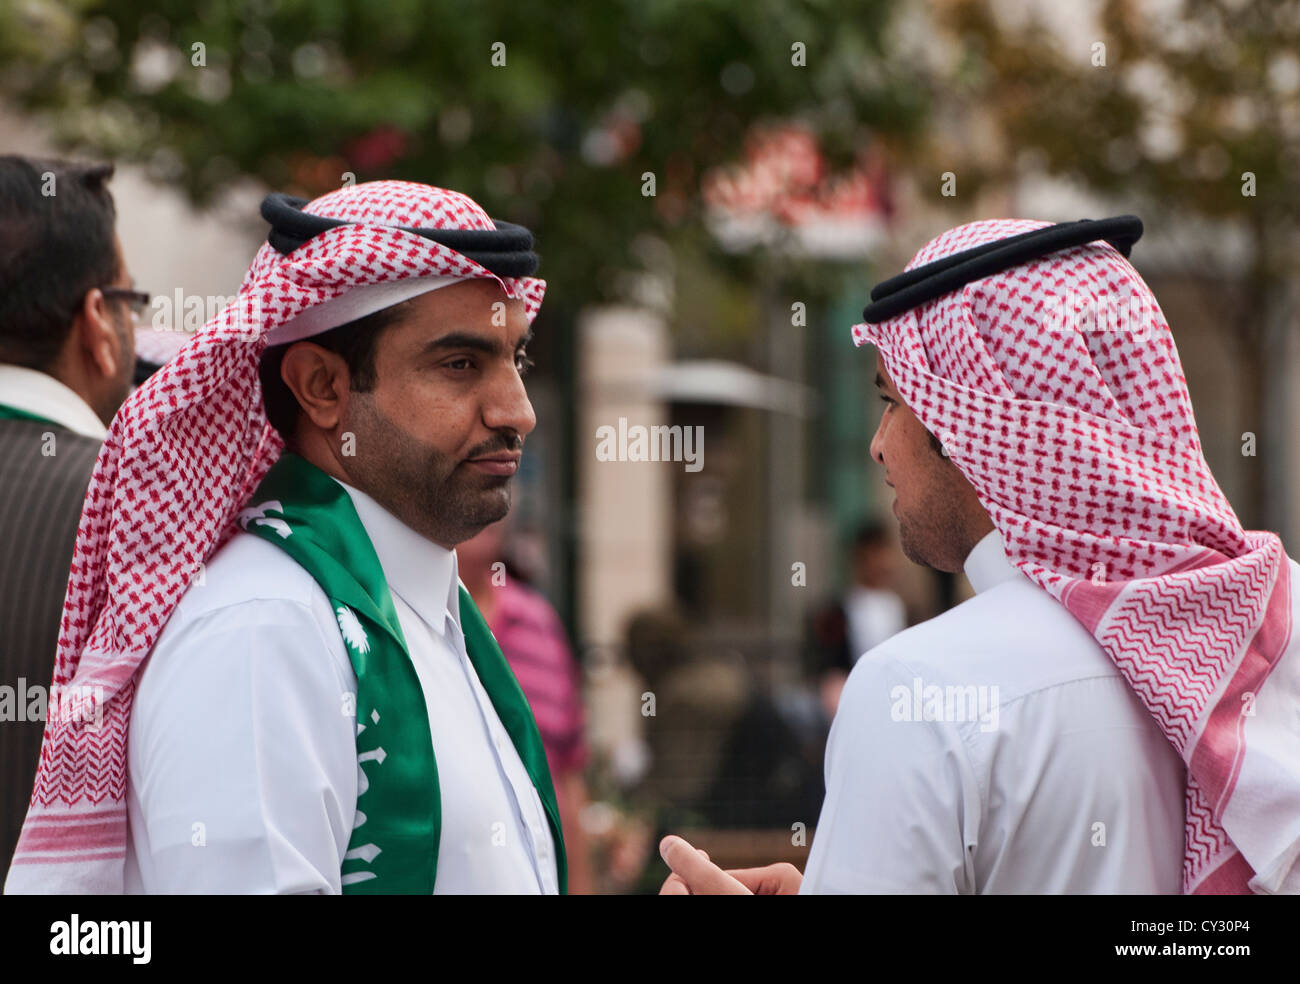 two Saudi Arabian men Stock Photo